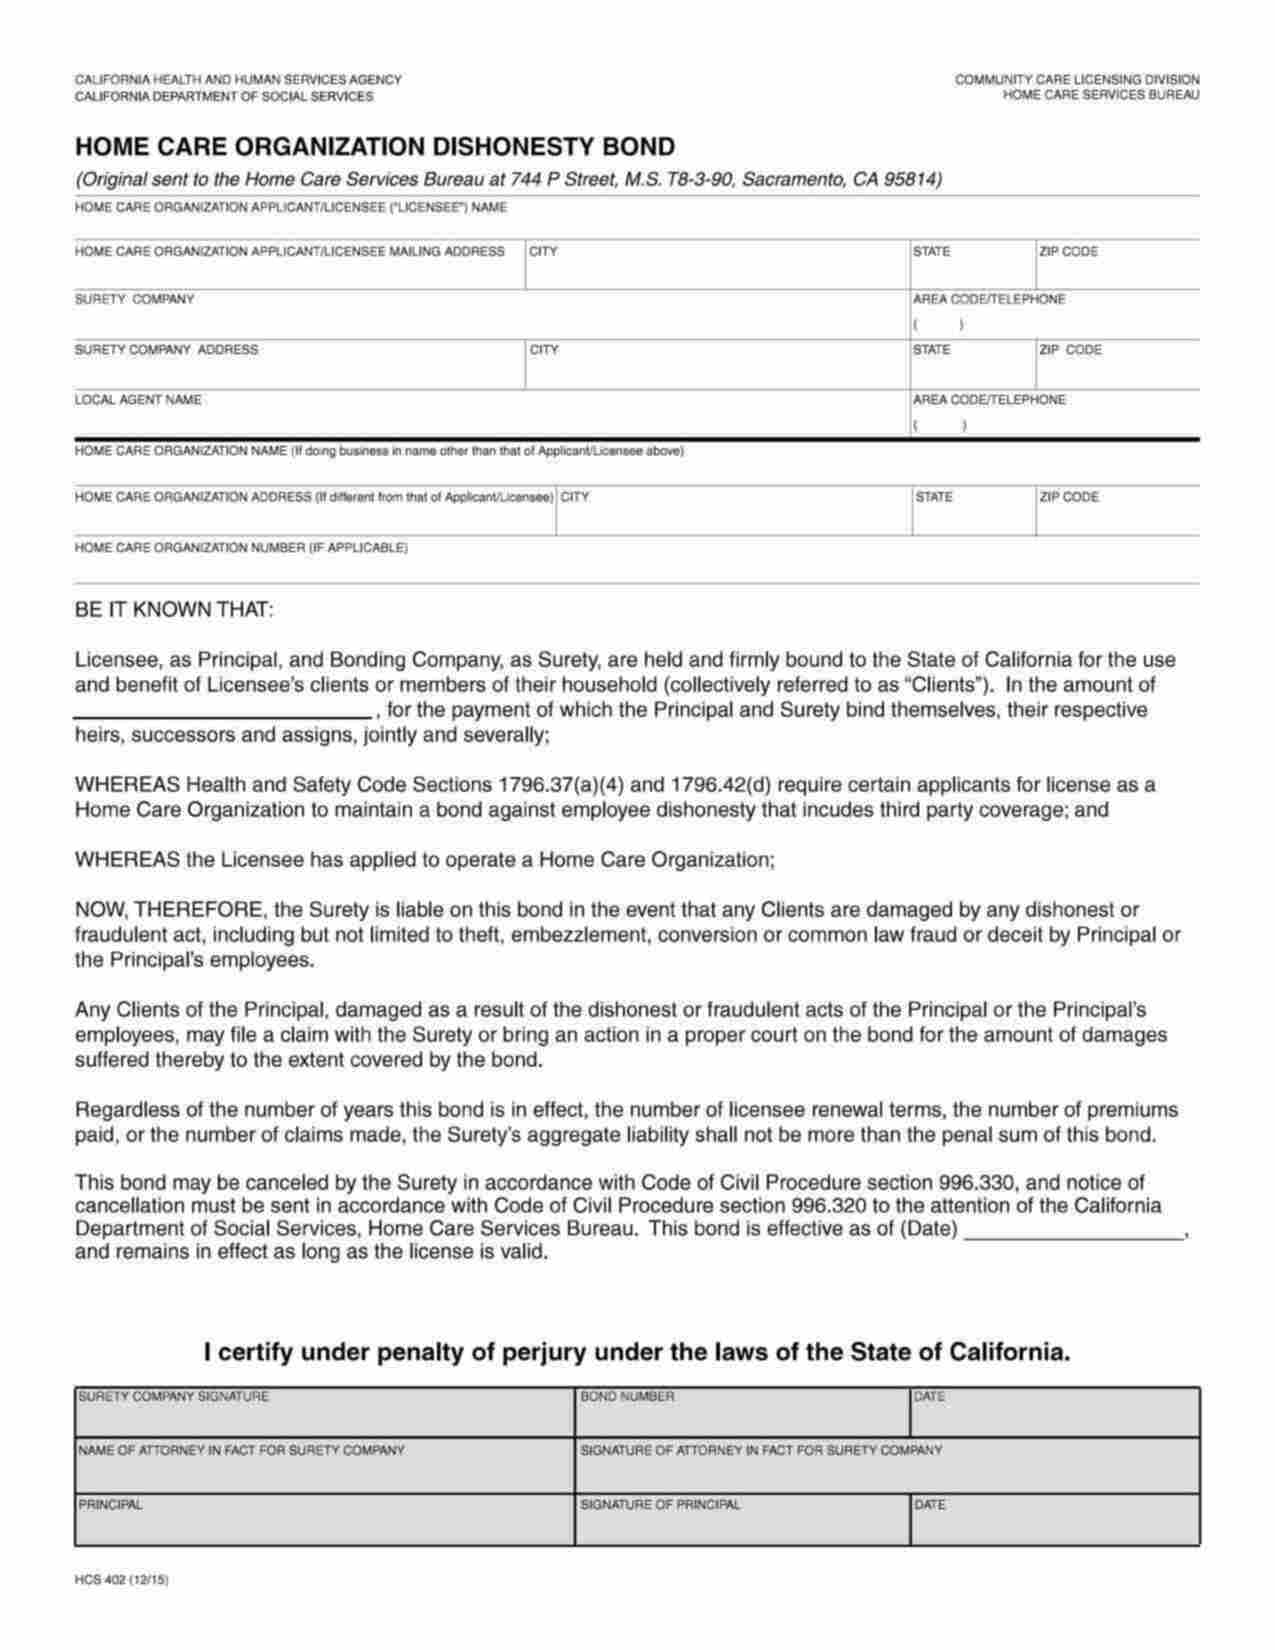 California Home Care Organization Employee Dishonesty License Bond Form